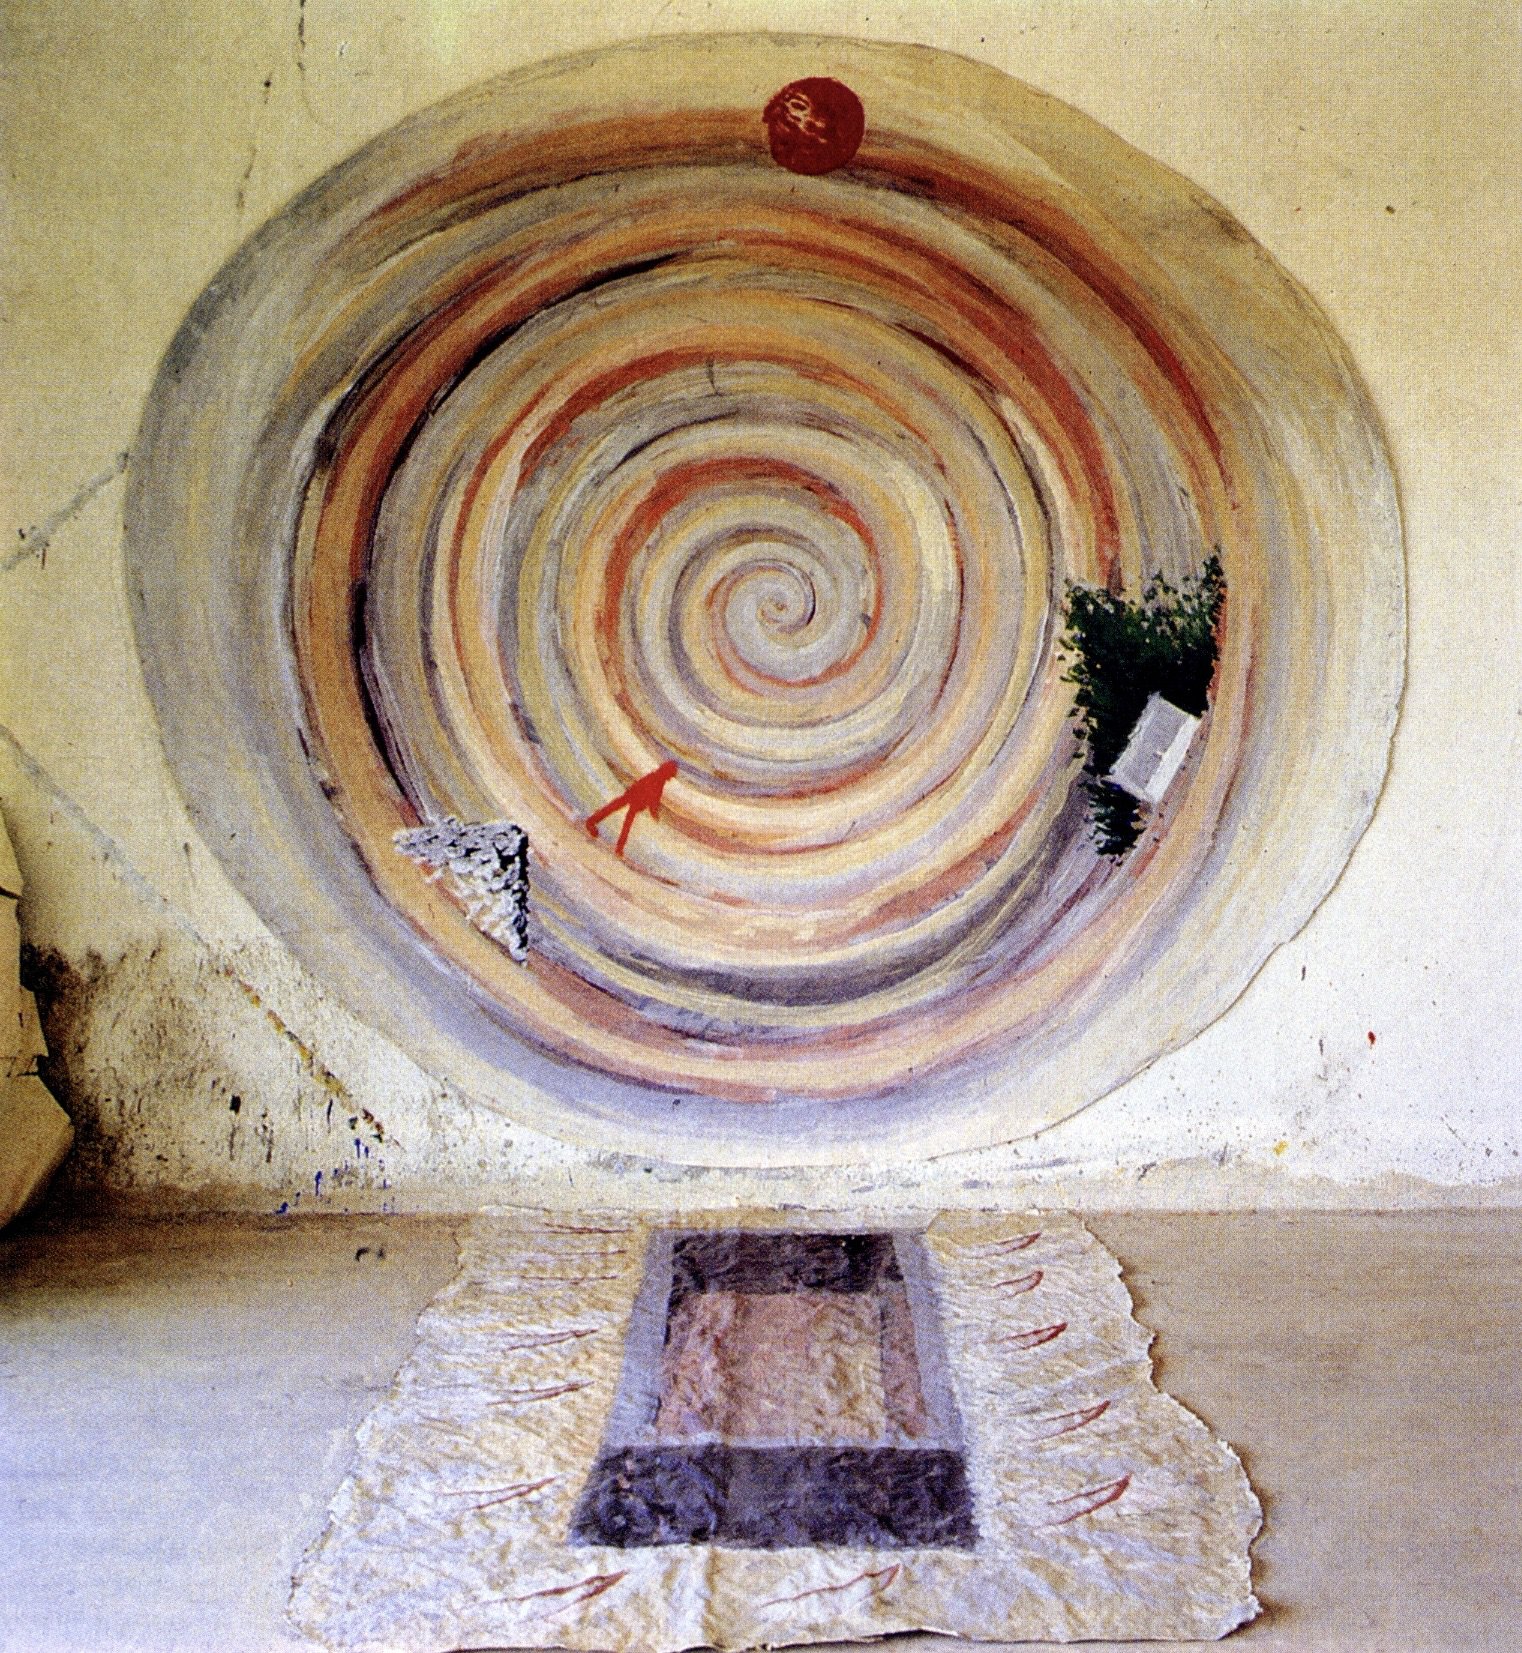 Thanasis Totsikas, Untitled, mixed media, 460 x 300 x 170 cm, 1986. Installation view, Utopia Versus Reality, 19a Bienal de São Paulo, São Paulo, 1987